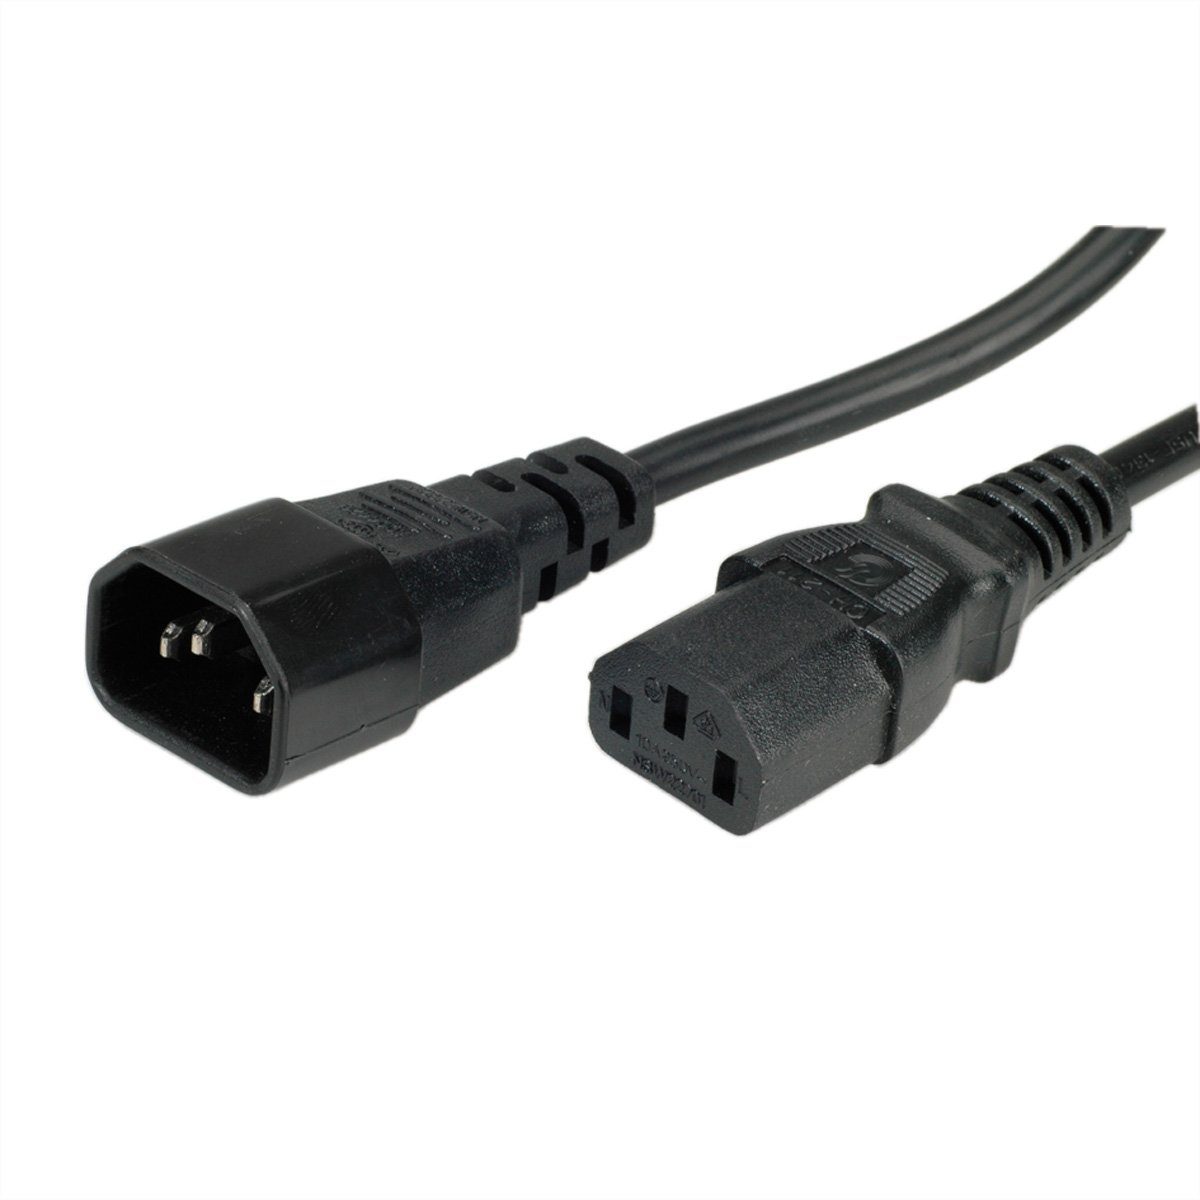 Bachmann Kaltgeräte-Kabel 2,5m schwarz IEC320 C13-C14 Stromkabel, IEC320 C14, Kaltgeräte, 10A Männlich (Stecker), IEC320 C13, Kaltgeräte, 10A Weiblich (Buchse) (250.0 cm)